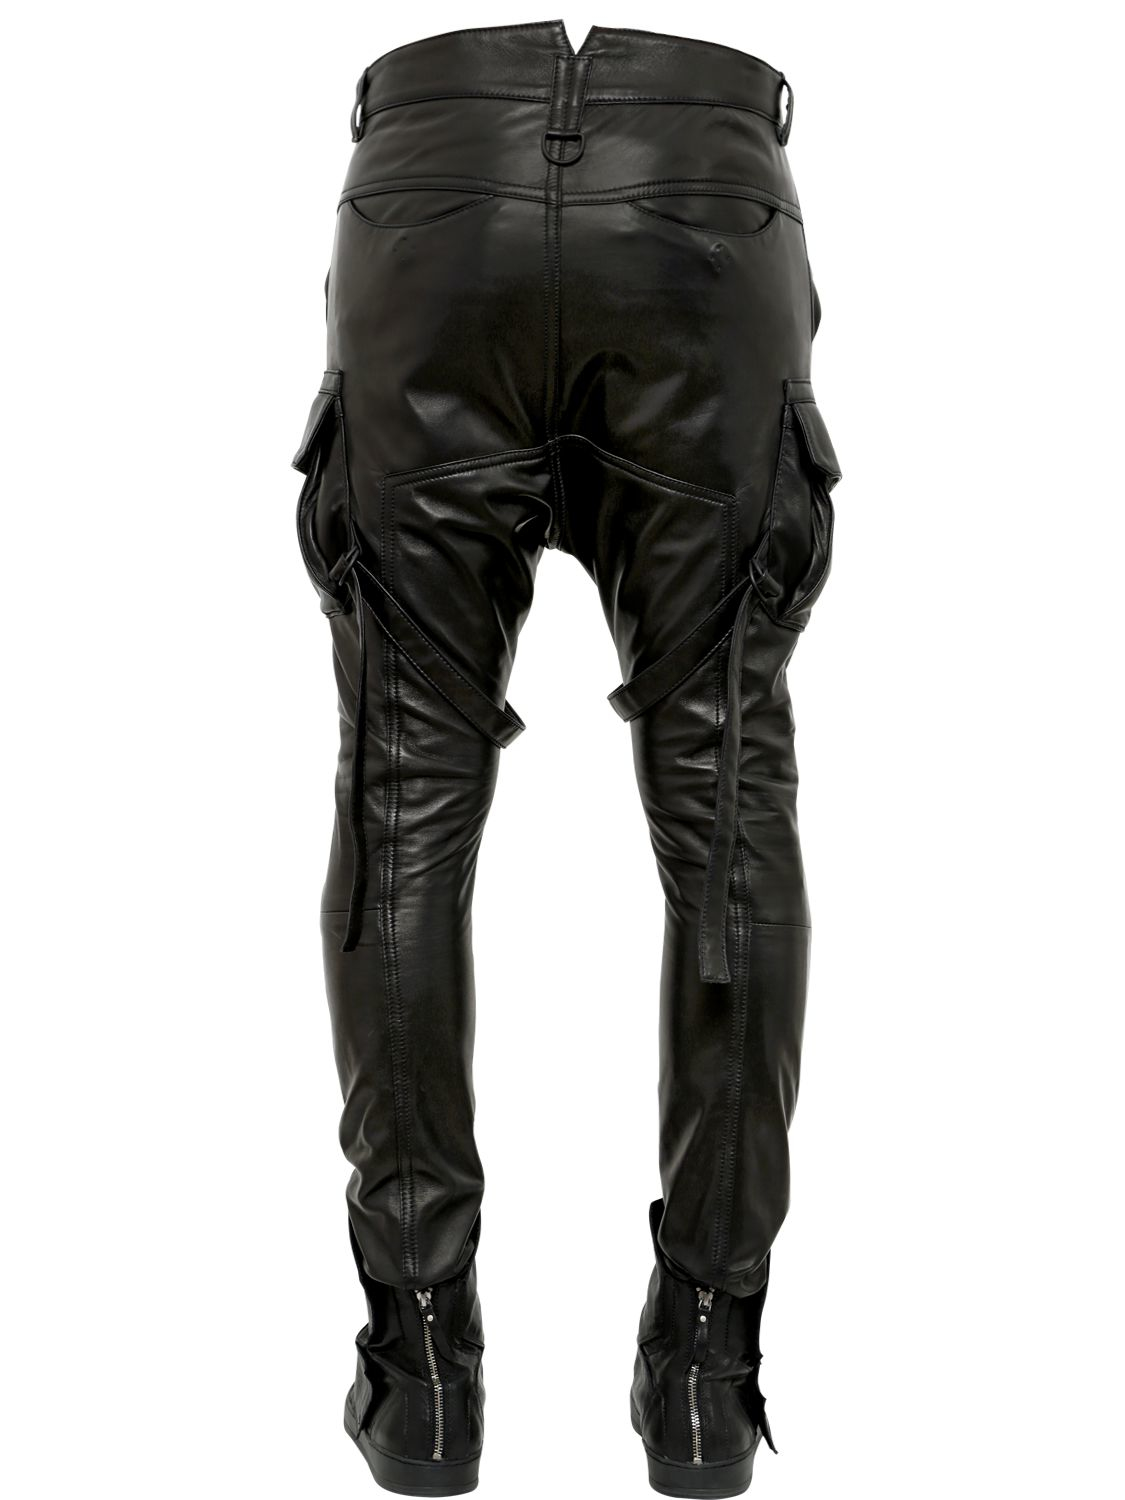 Lyst - Alexandre Plokhov Nappa Leather Cargo Pants in Black for Men